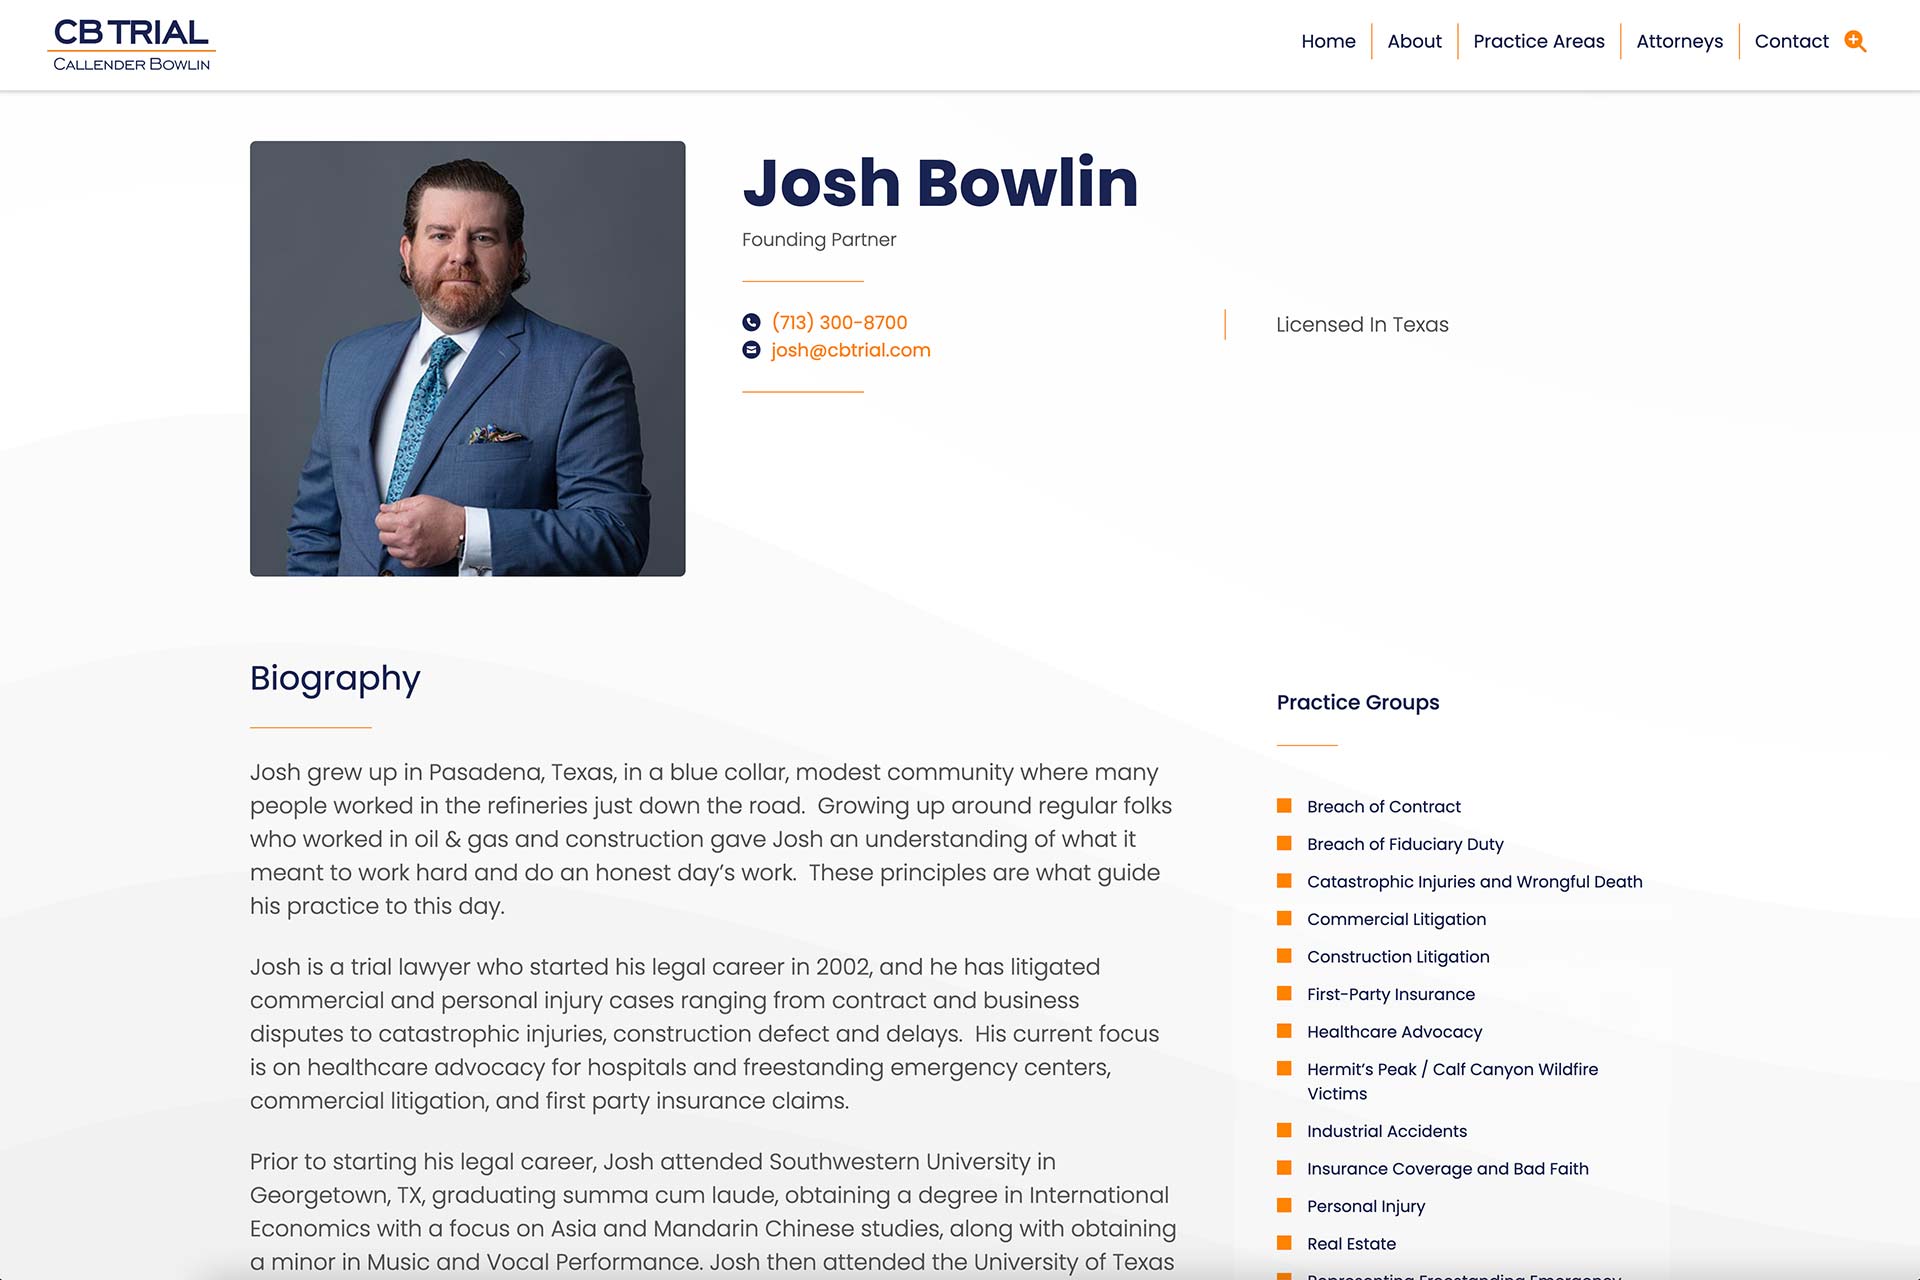 Website screenshot of Houston-based law firm Callender Bowlin.